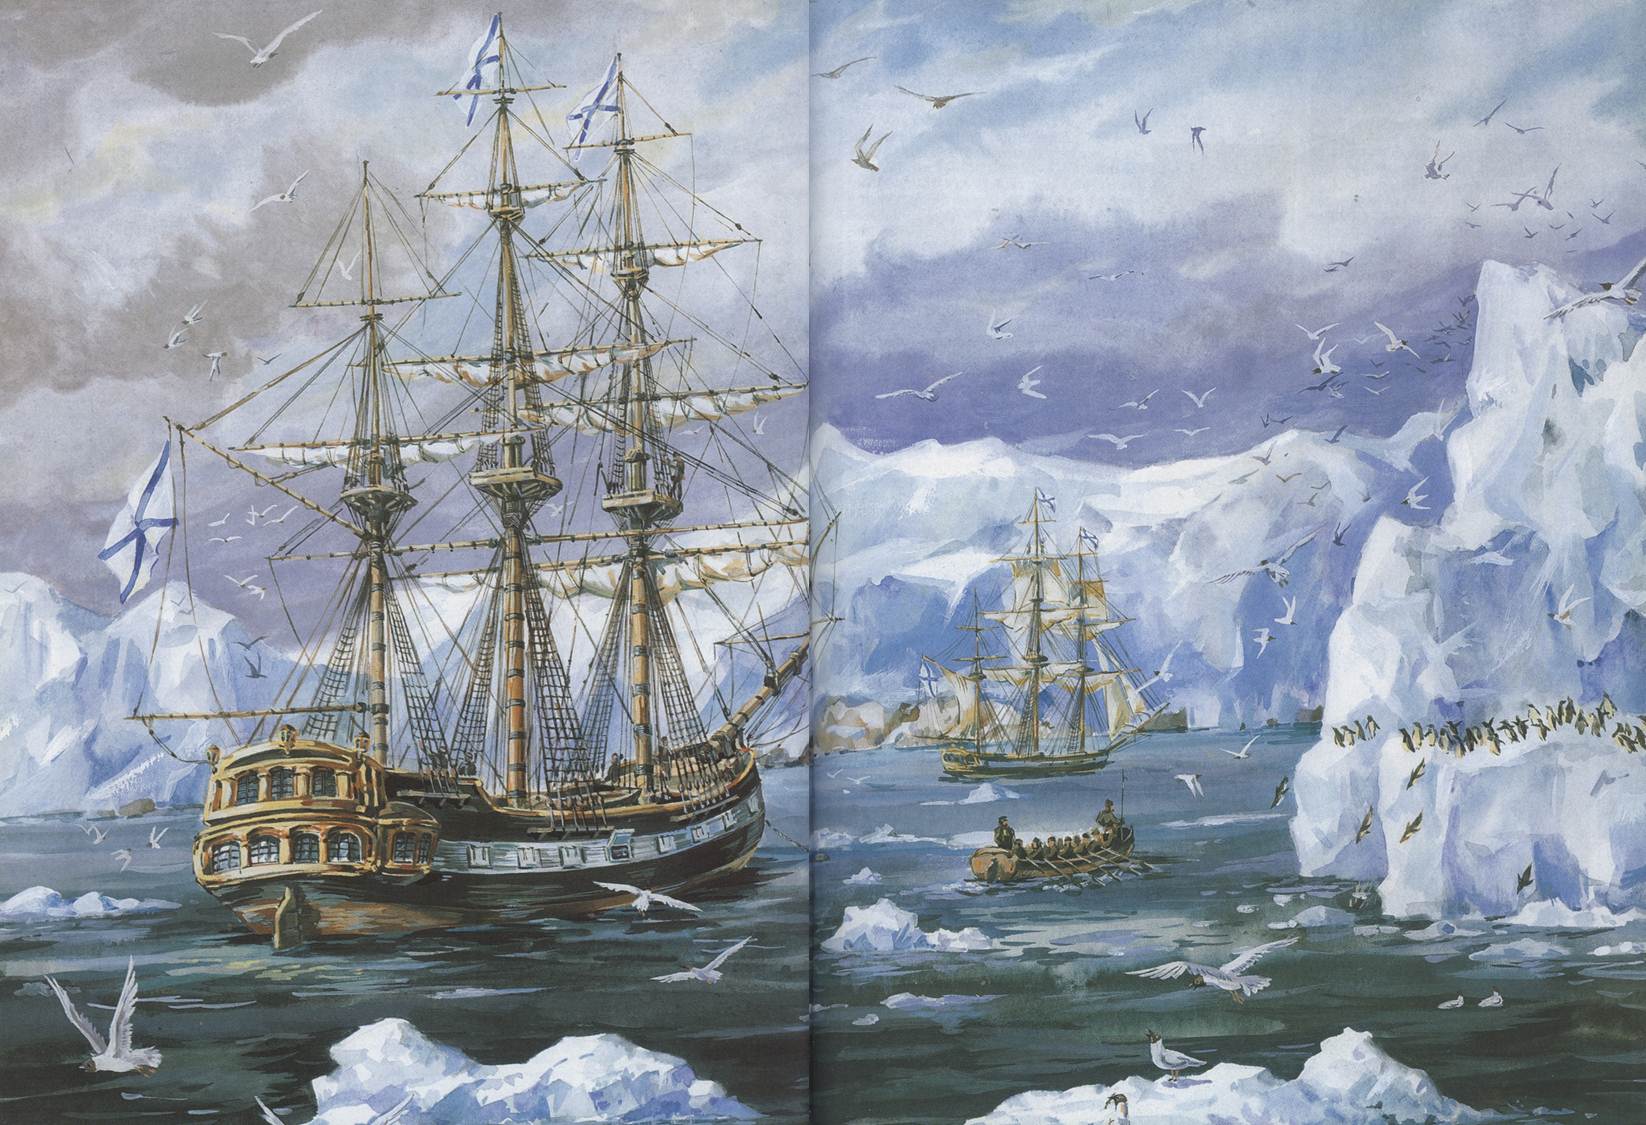 "Открытие Антарктиды экспедицией М. П. Лазарева и Ф. Ф. Беллинсгаузена. Январь 1820 года."